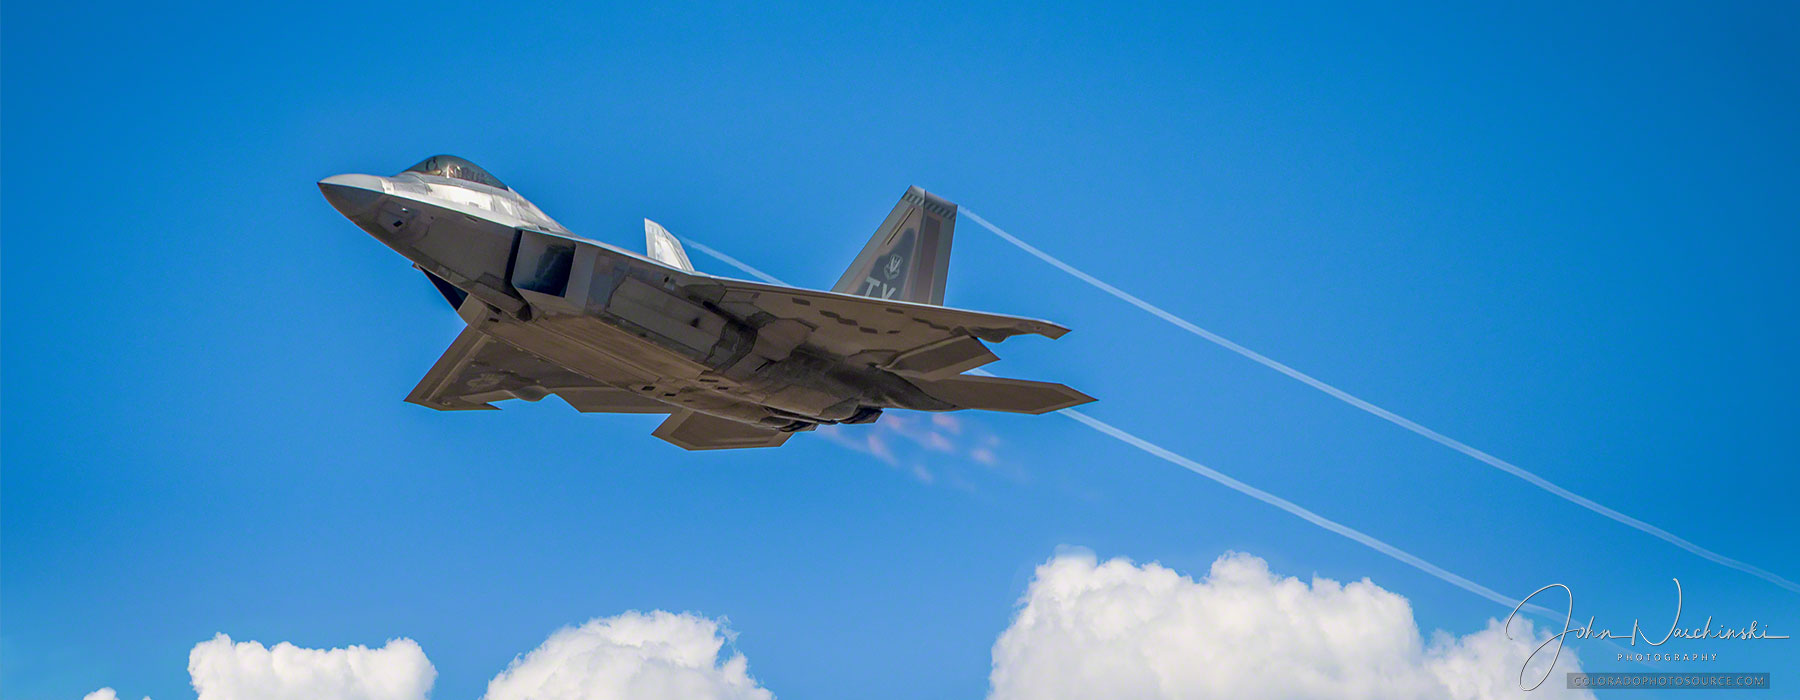 Photo of USAF F-22 Raptor in Flight with Vapor Trails